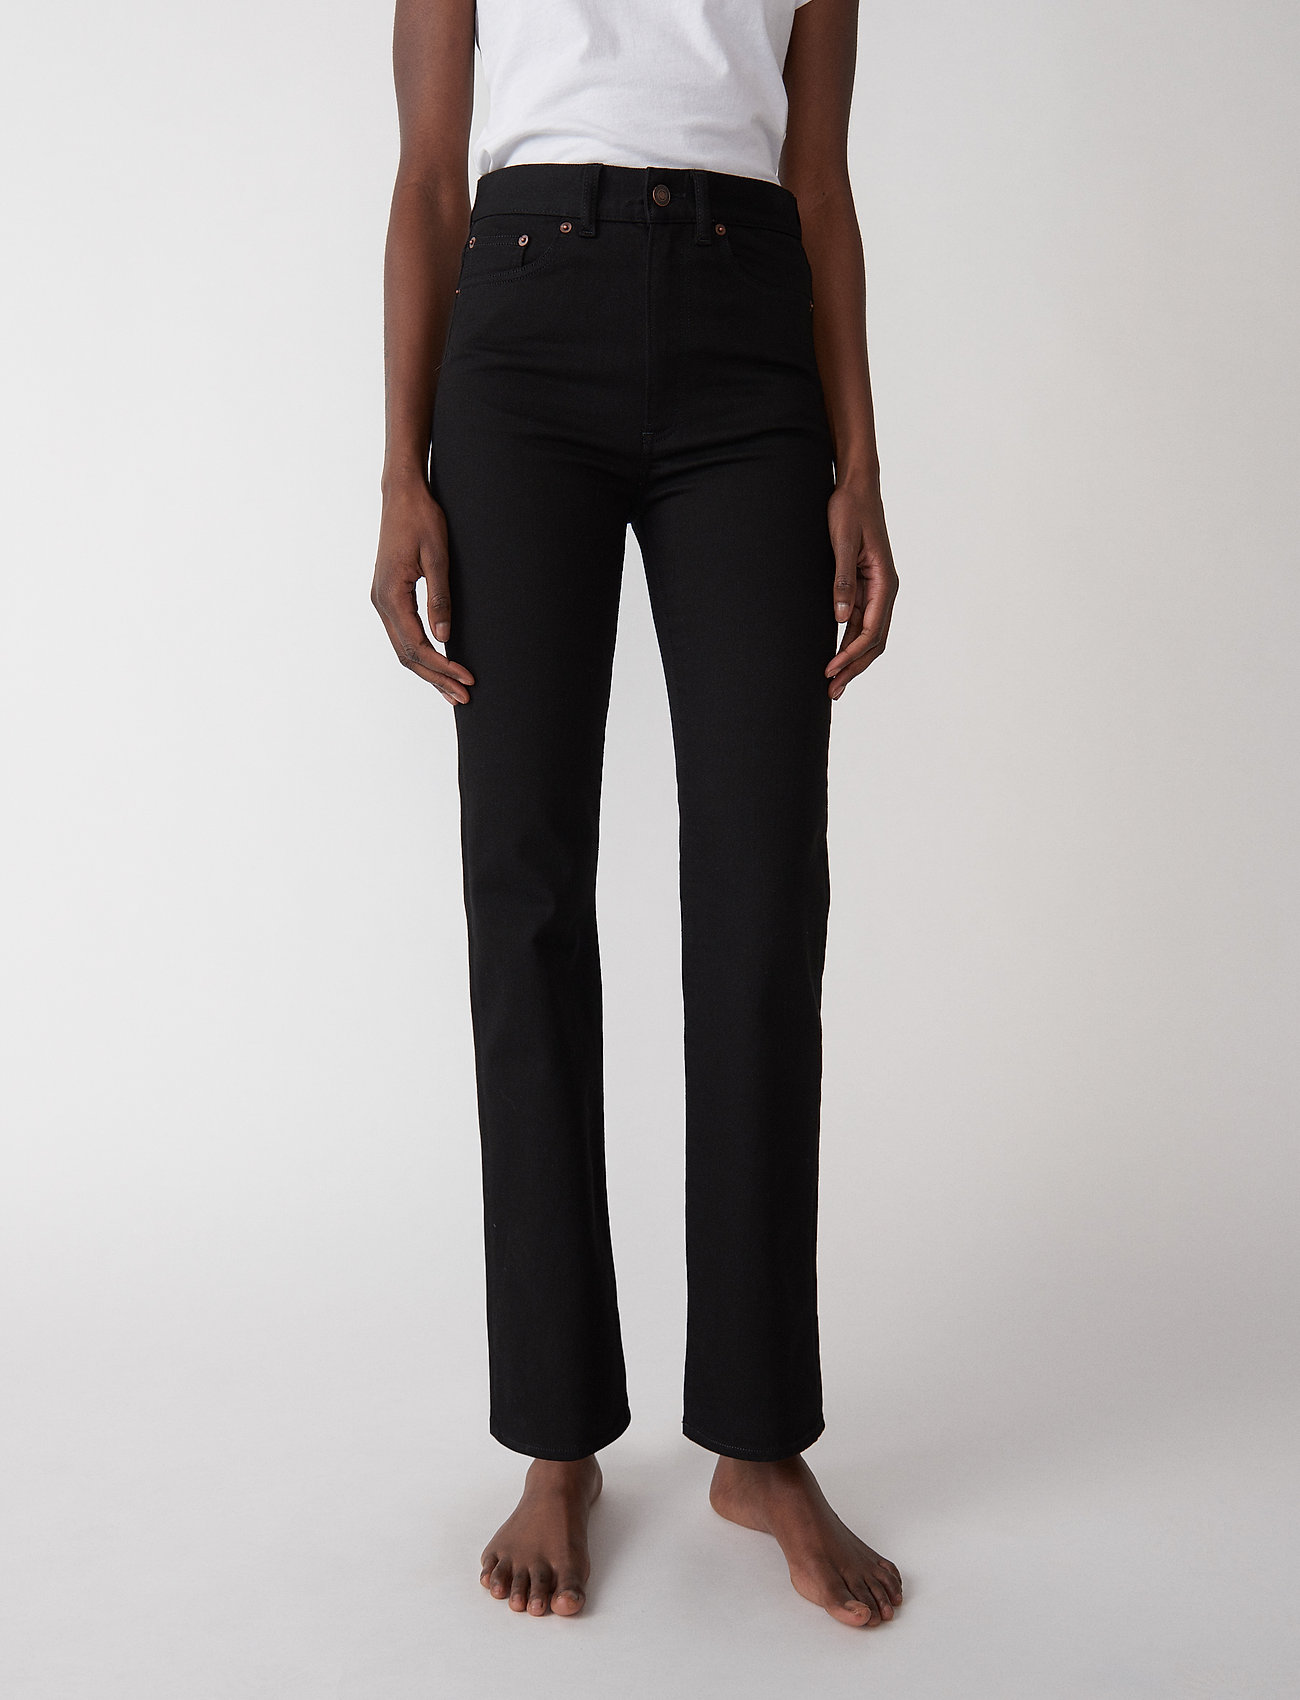 Jeanerica - EW004 - raka jeans - rinse stay black - 0